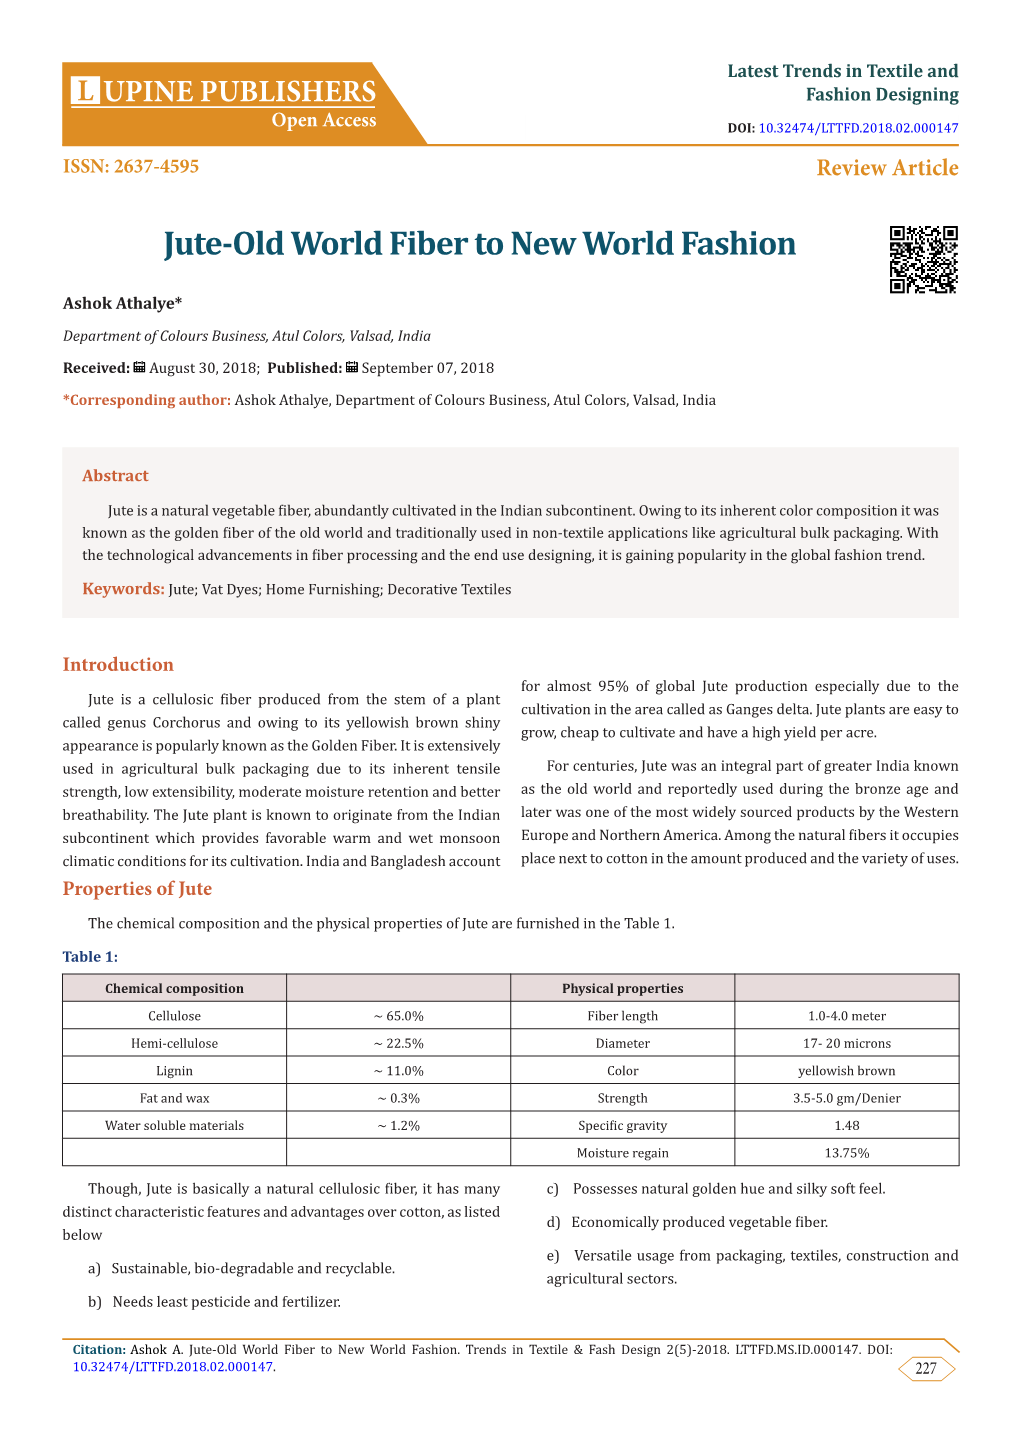 Jute-Old World Fiber to New World Fashion